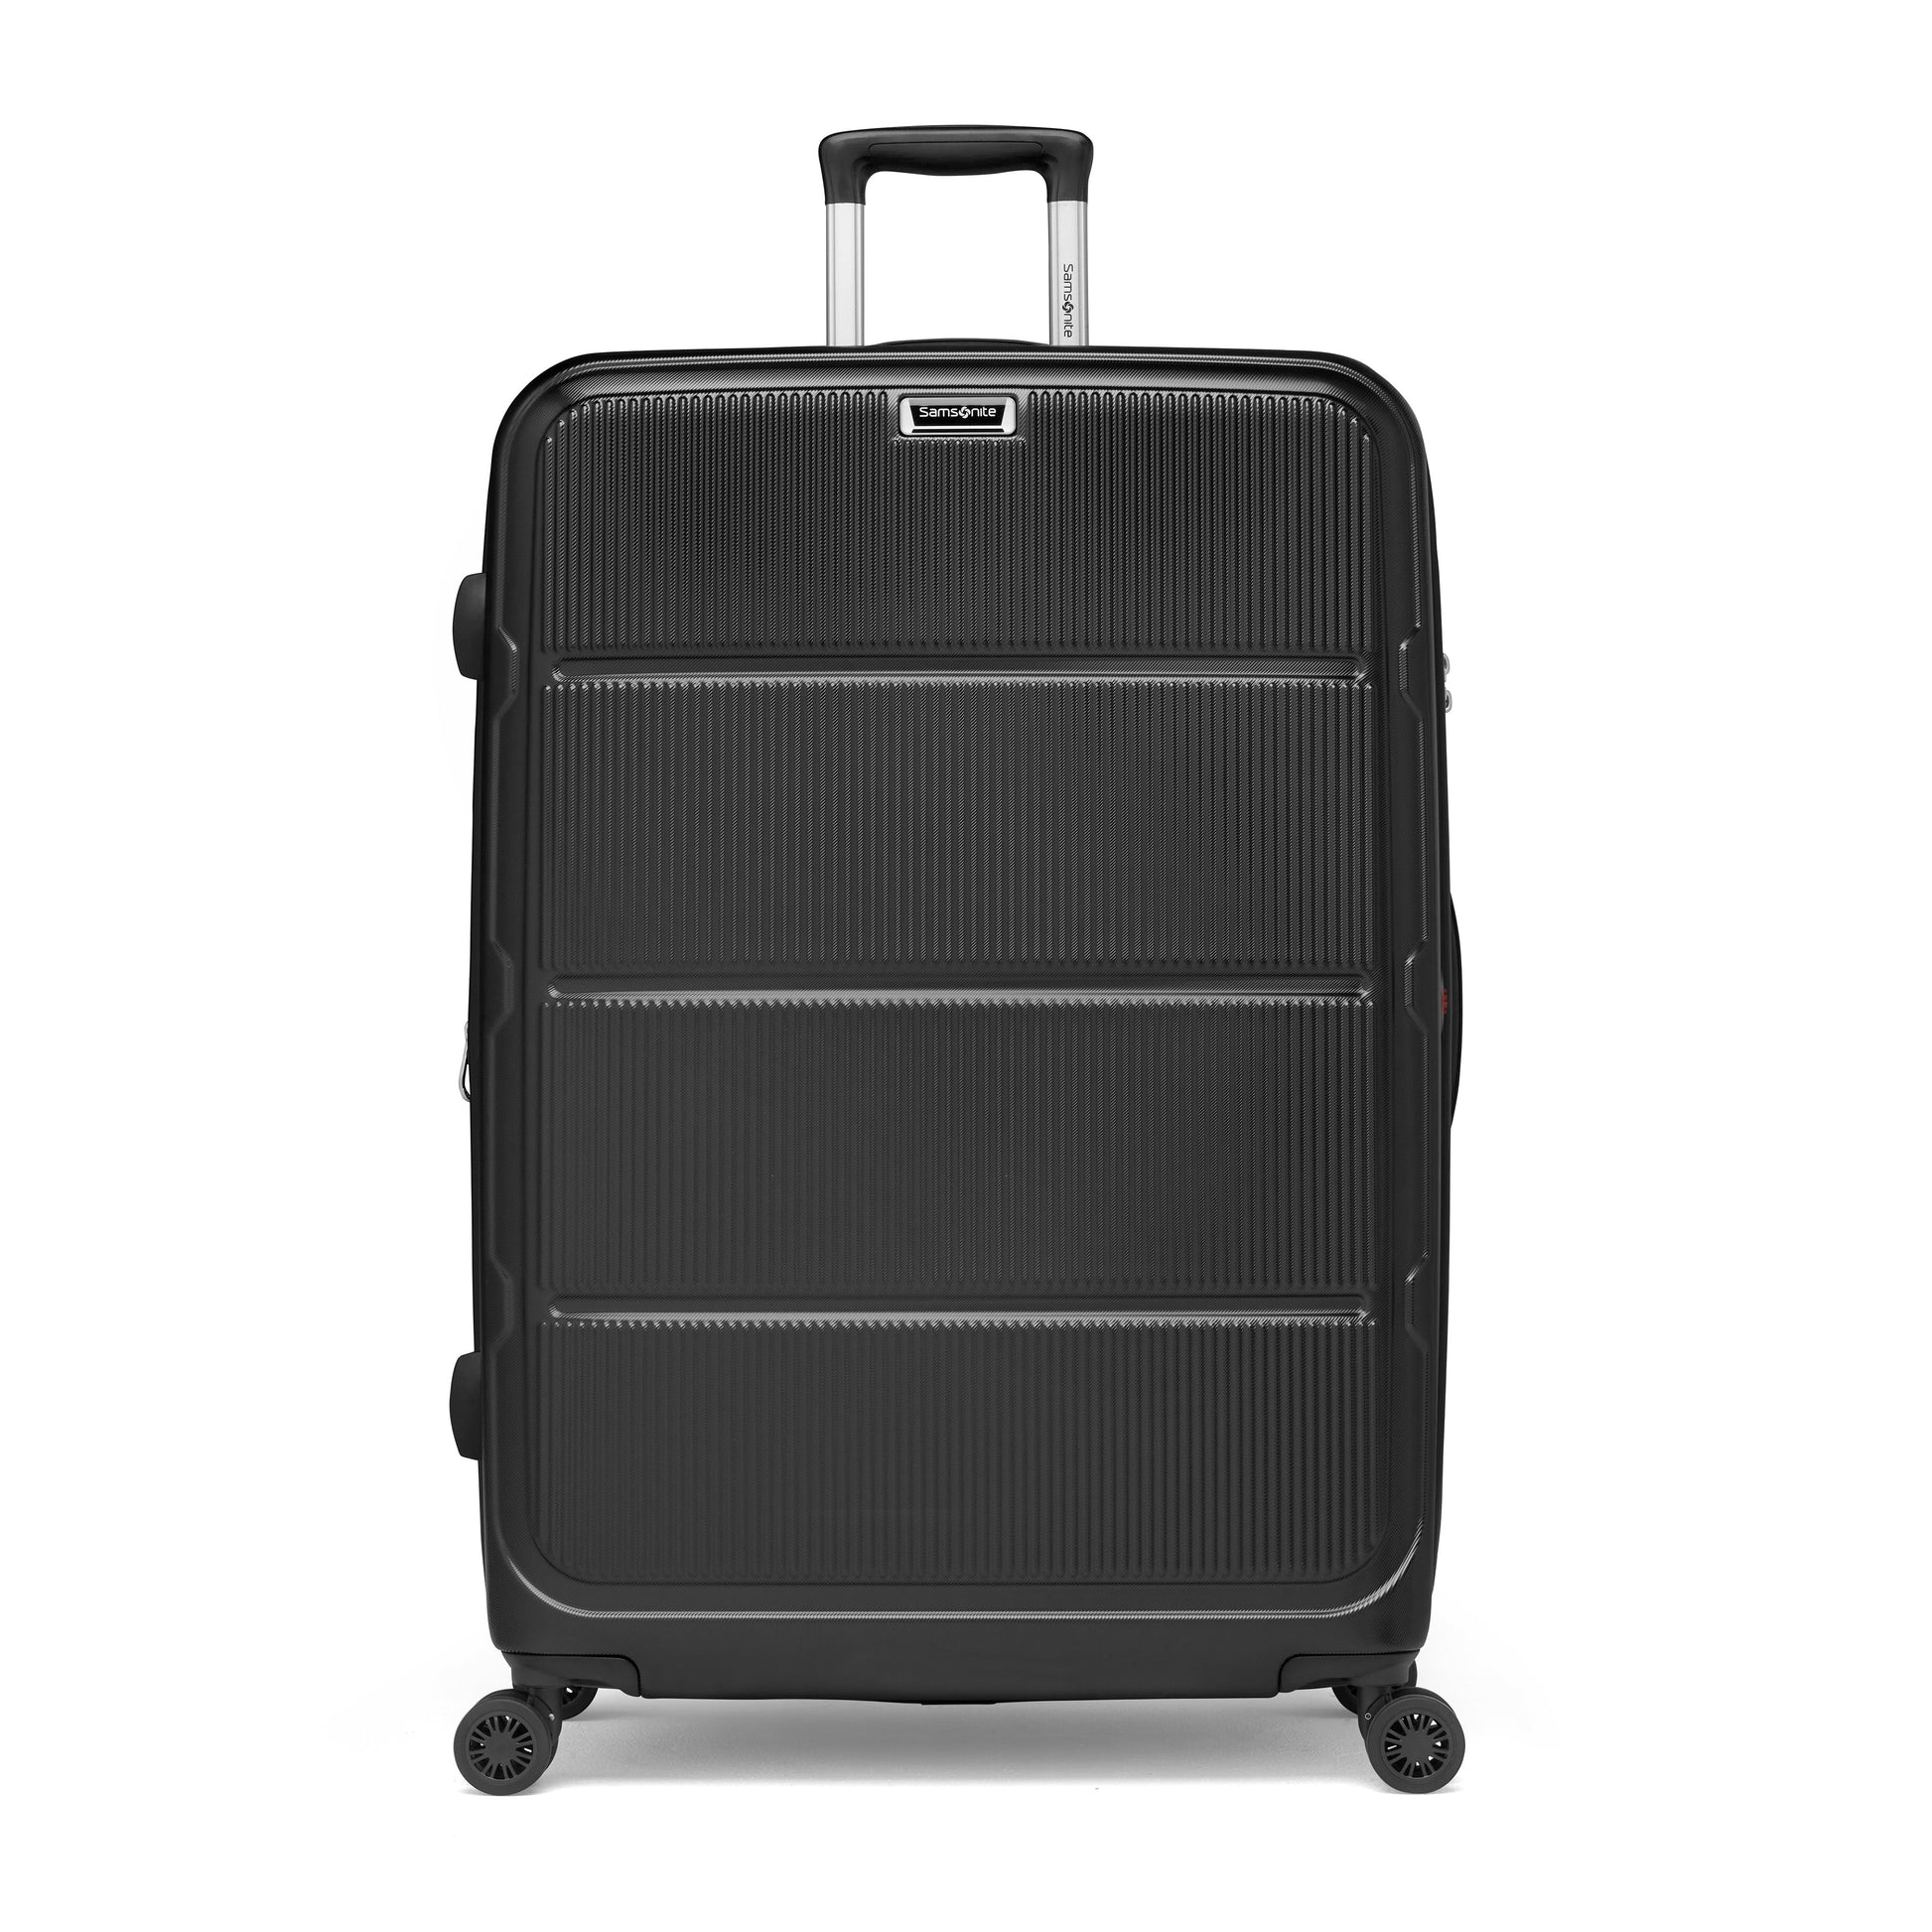 Samsonite Streamlite Pro 3-Piece Nested Spinner Luggage Set